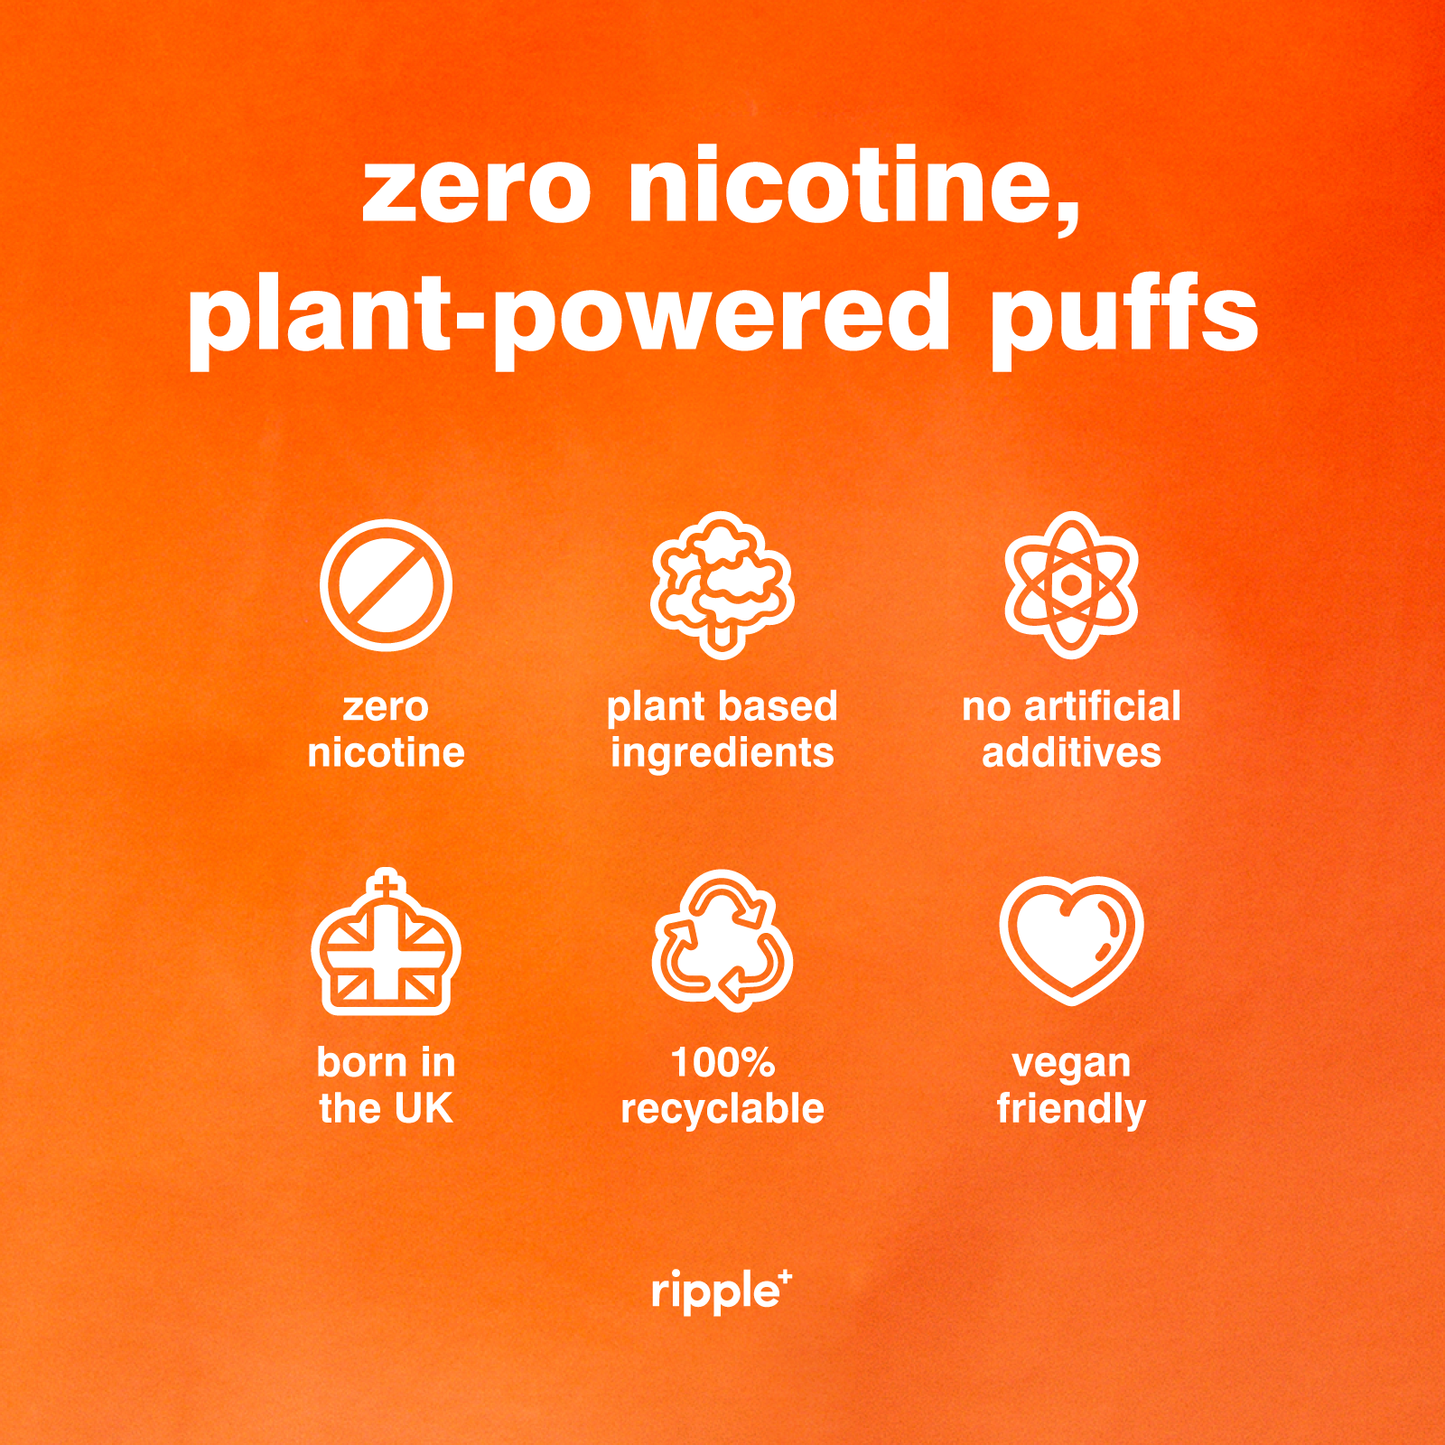 
                  
                    Ripple+ Focus - Mango Zero Nicotine Diffuser - 1,000 Puffs: 40g
                  
                